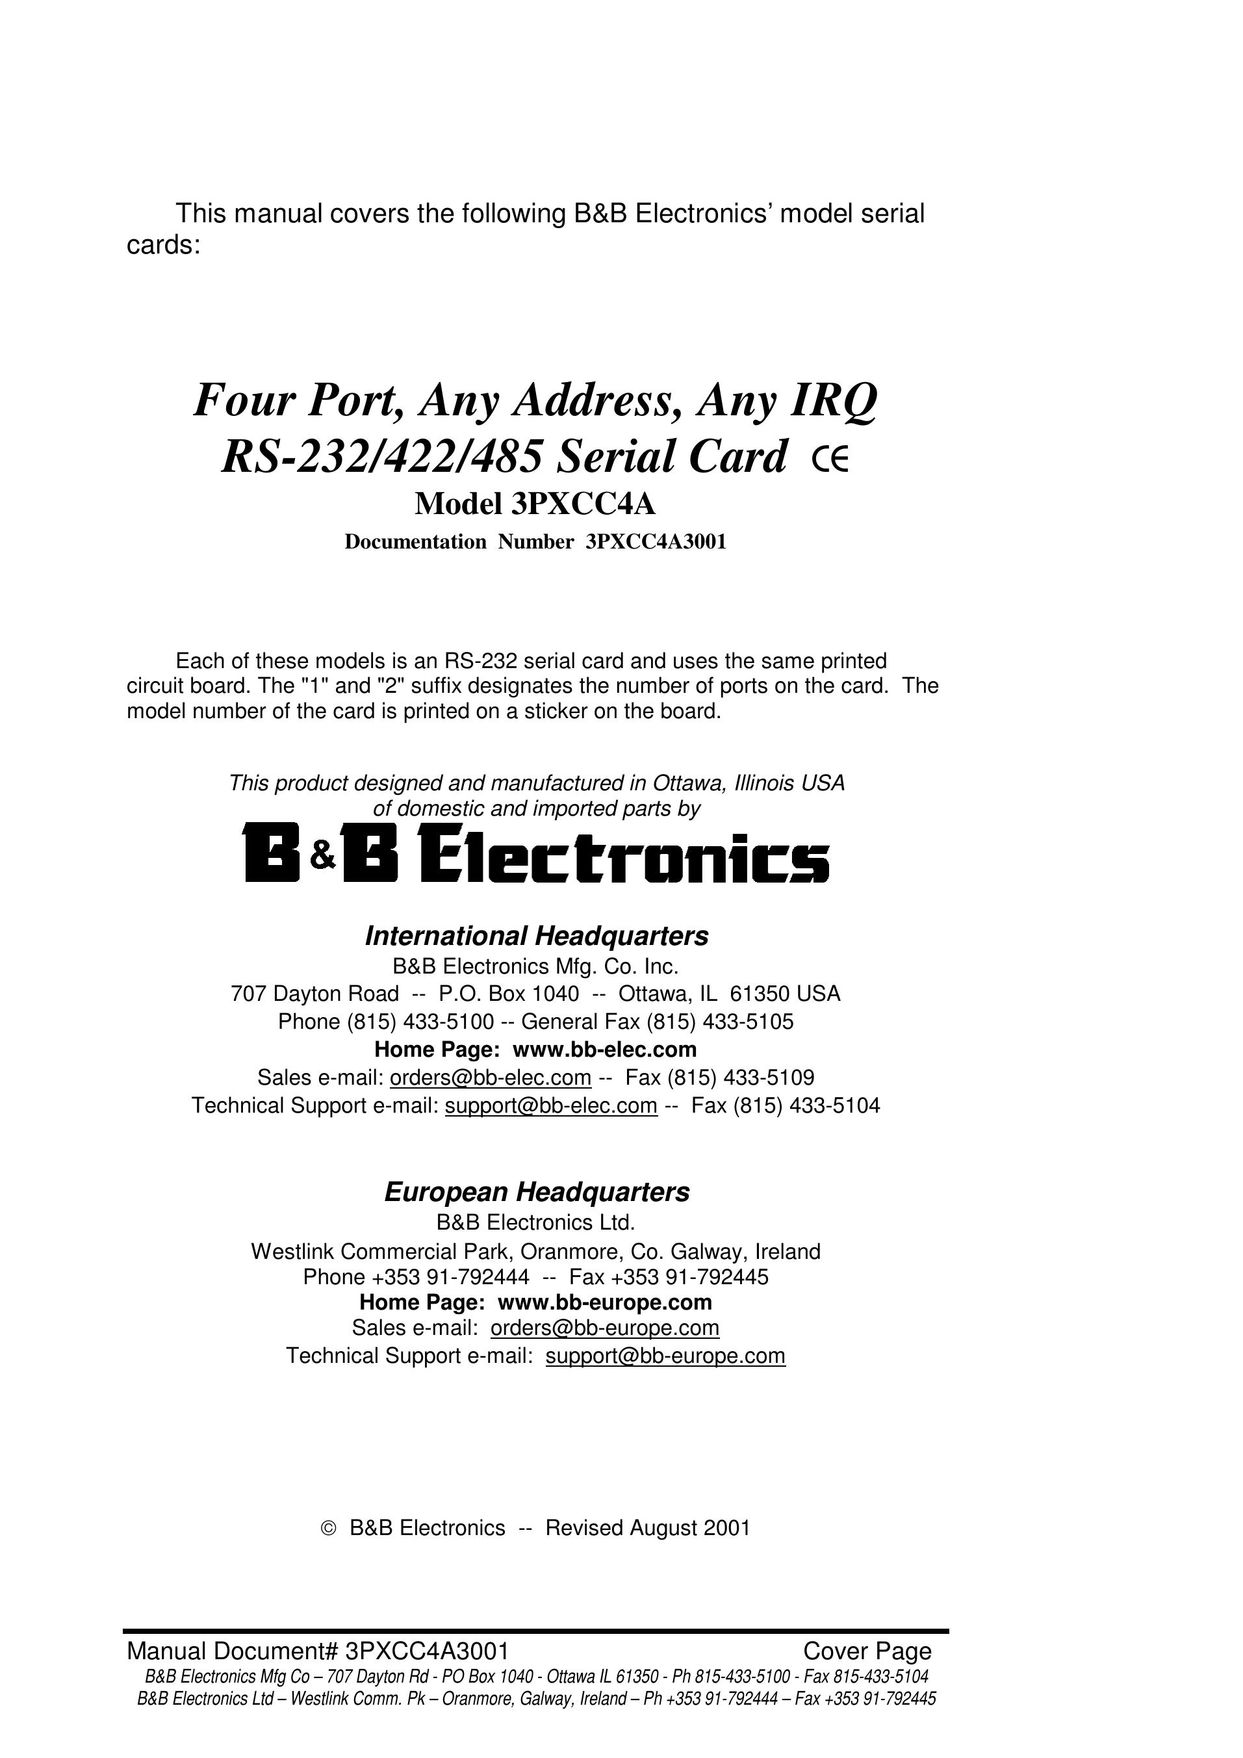 B&B Electronics 3PXCC4A Network Card User Manual